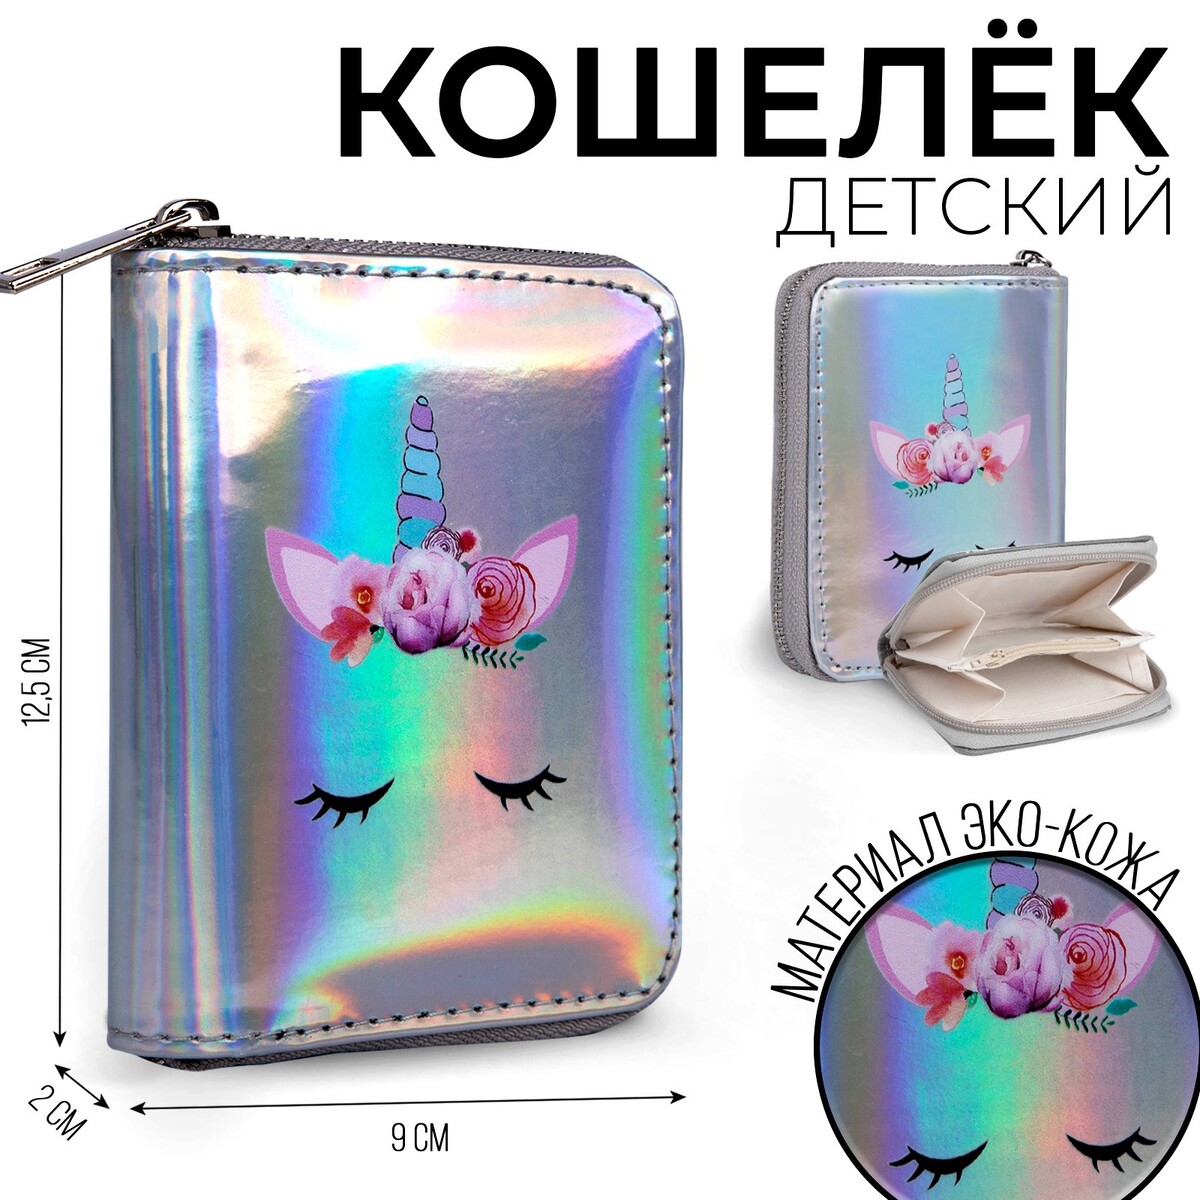 Кошелек с голографическим эффектом, цвет серебро кошелек с голографическим эффектом lucky wallet 12 5х9х2 см